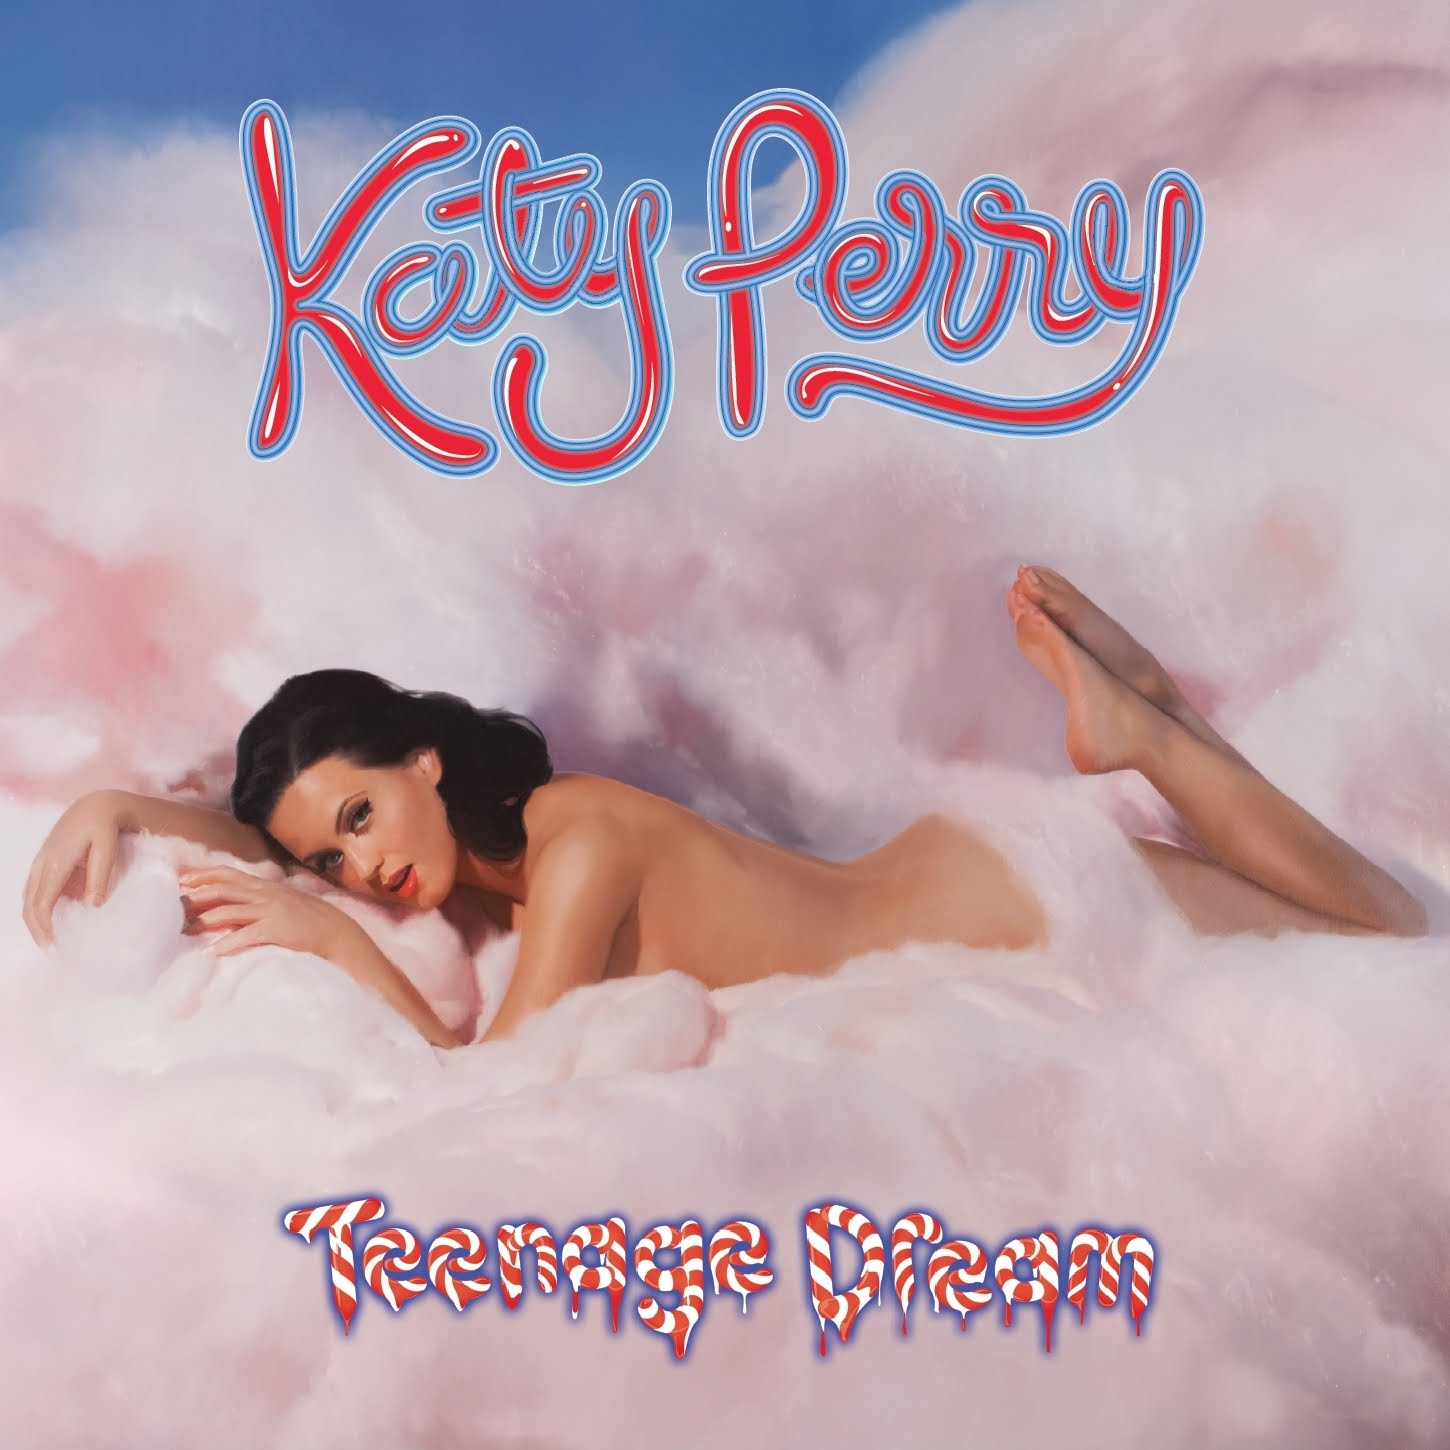 Katy+Perry+-+Teenage+Dream+Album+Cover+HQ.jpg